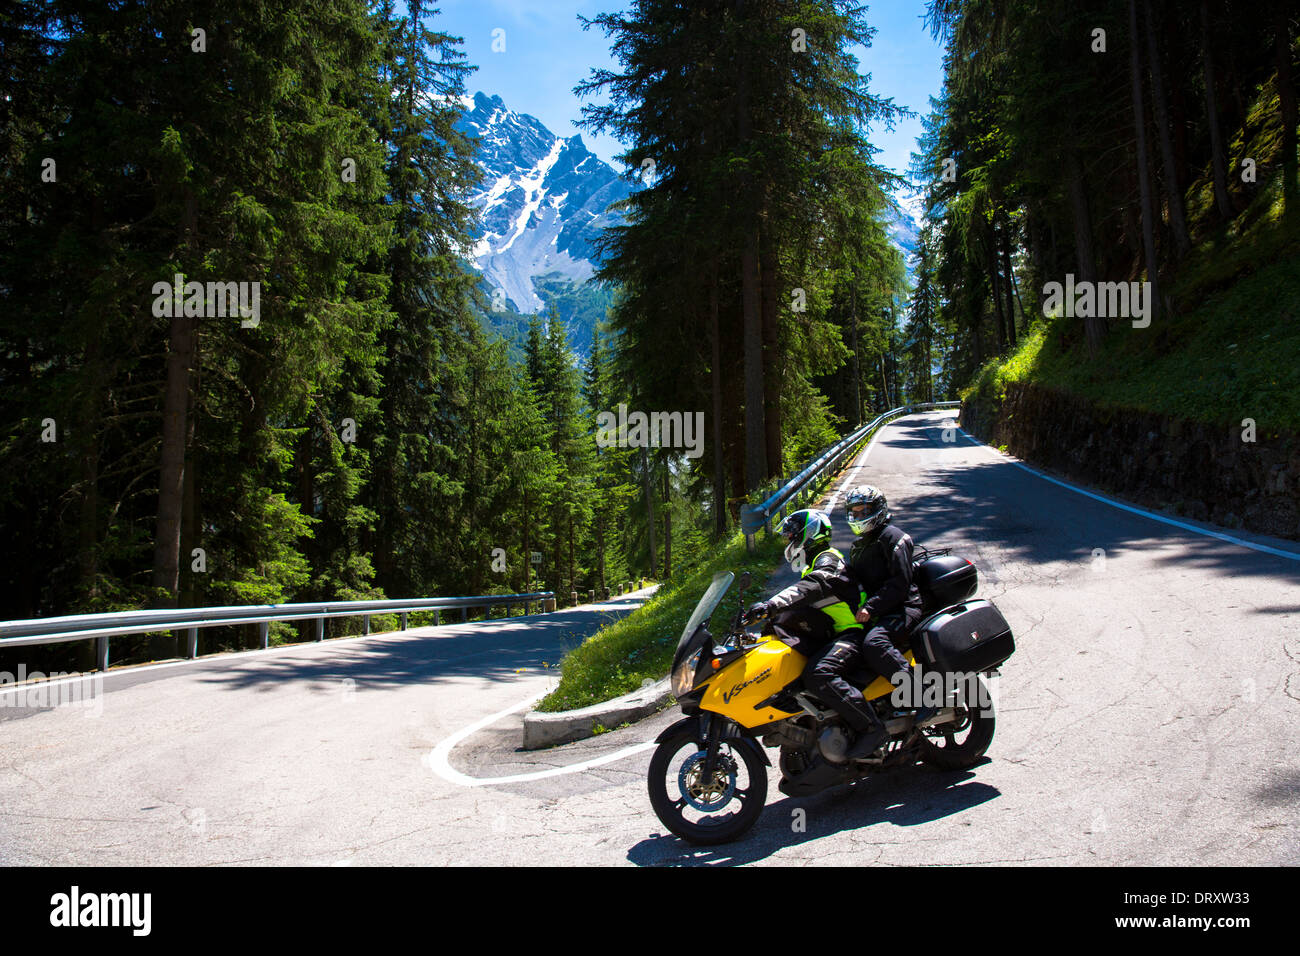 Moto Suzuki Vstrom sur le col du Stelvio, passo dello Stelvio, Stilfser Joch, route d'Trafio dans les Alpes, France Banque D'Images